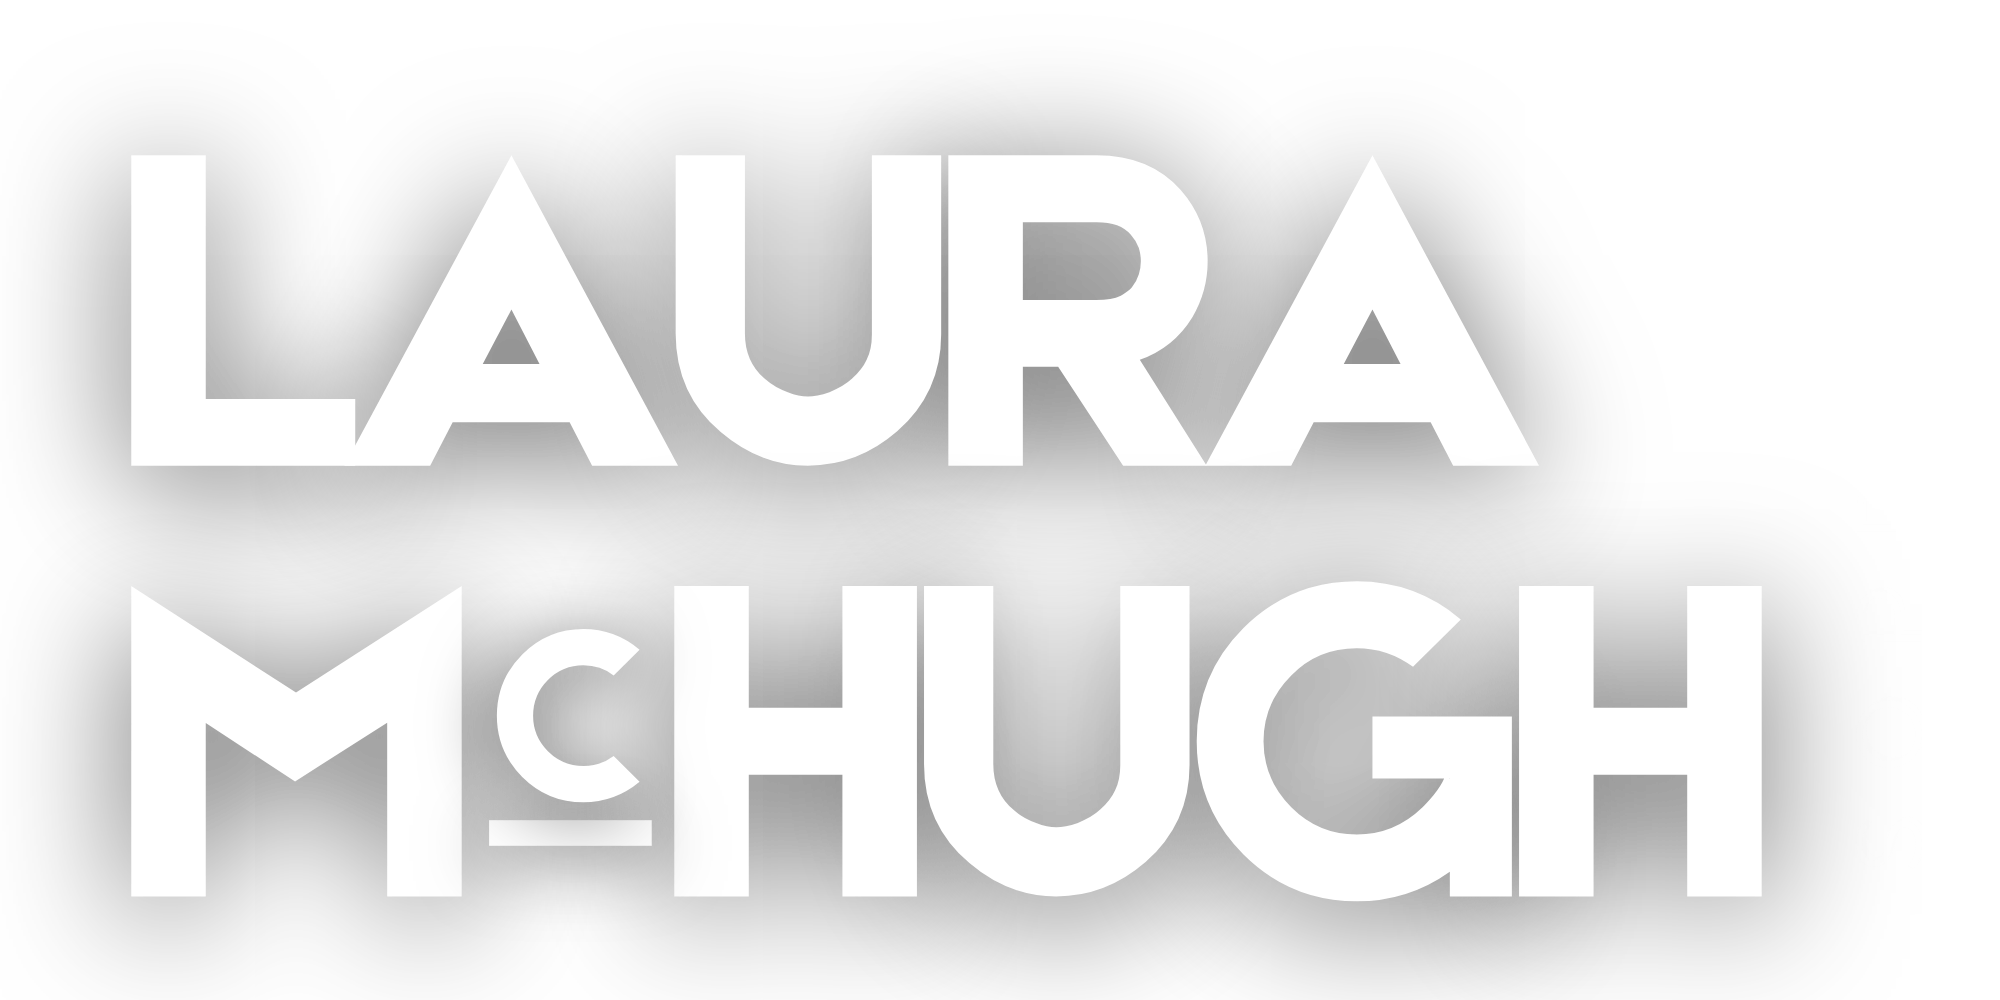 Laura McHugh